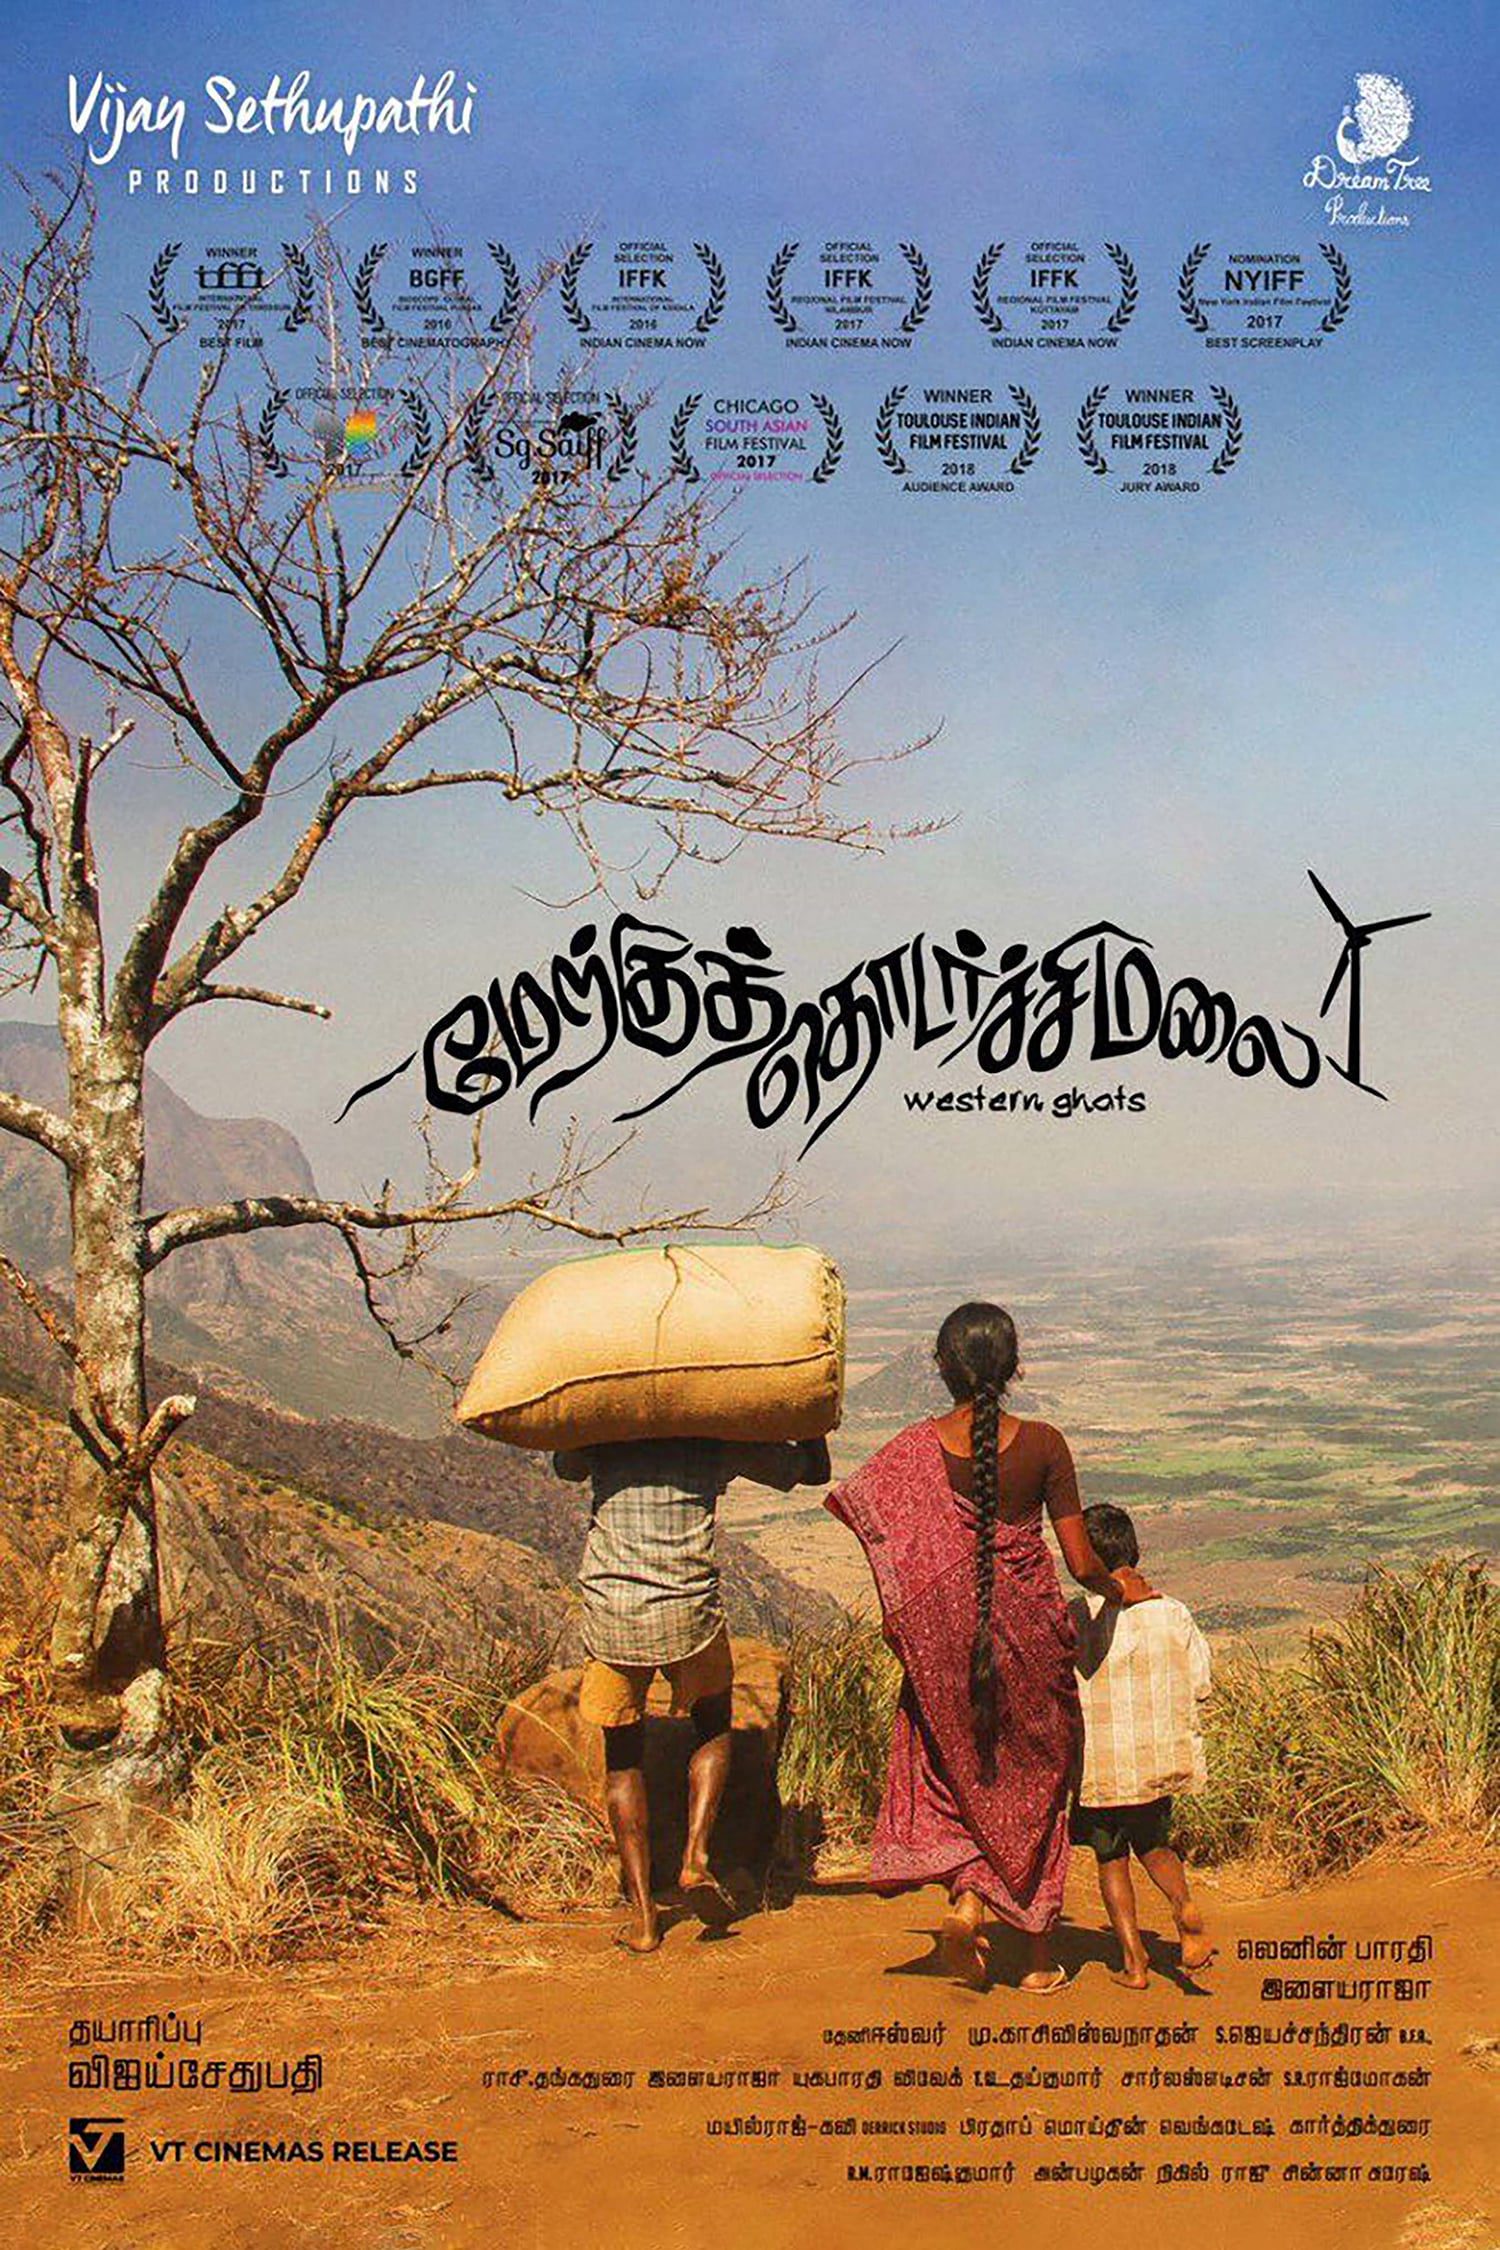 Poster for the movie "Merku Thodarchi Malai"